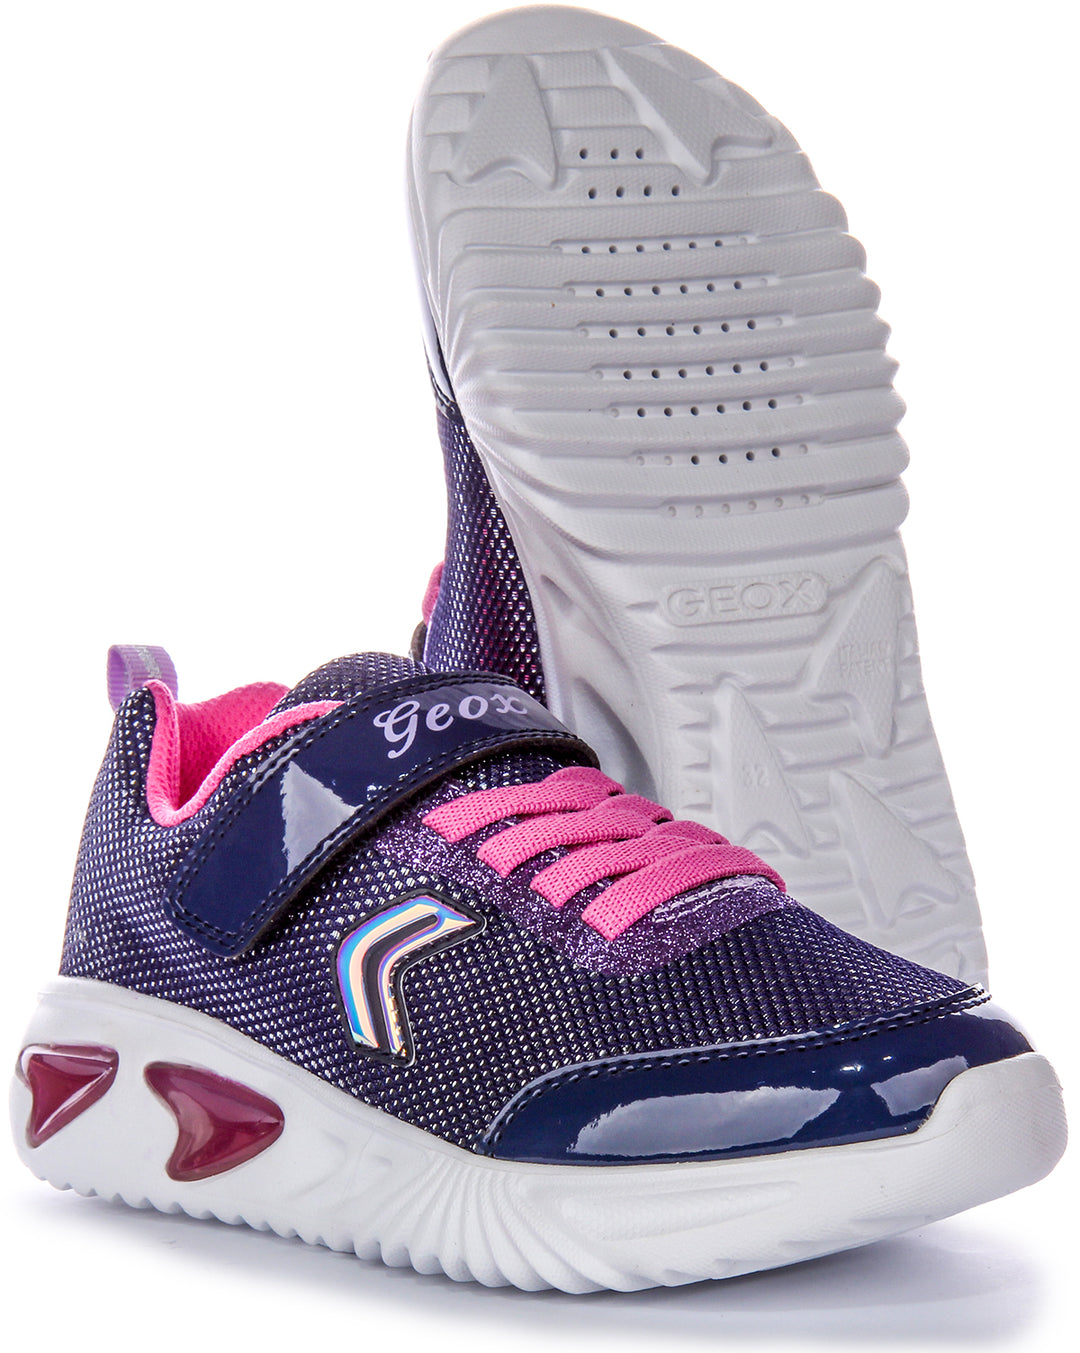 Sneakers mesh per neonati Geox J Assister G. A Infants in blu navy rosa